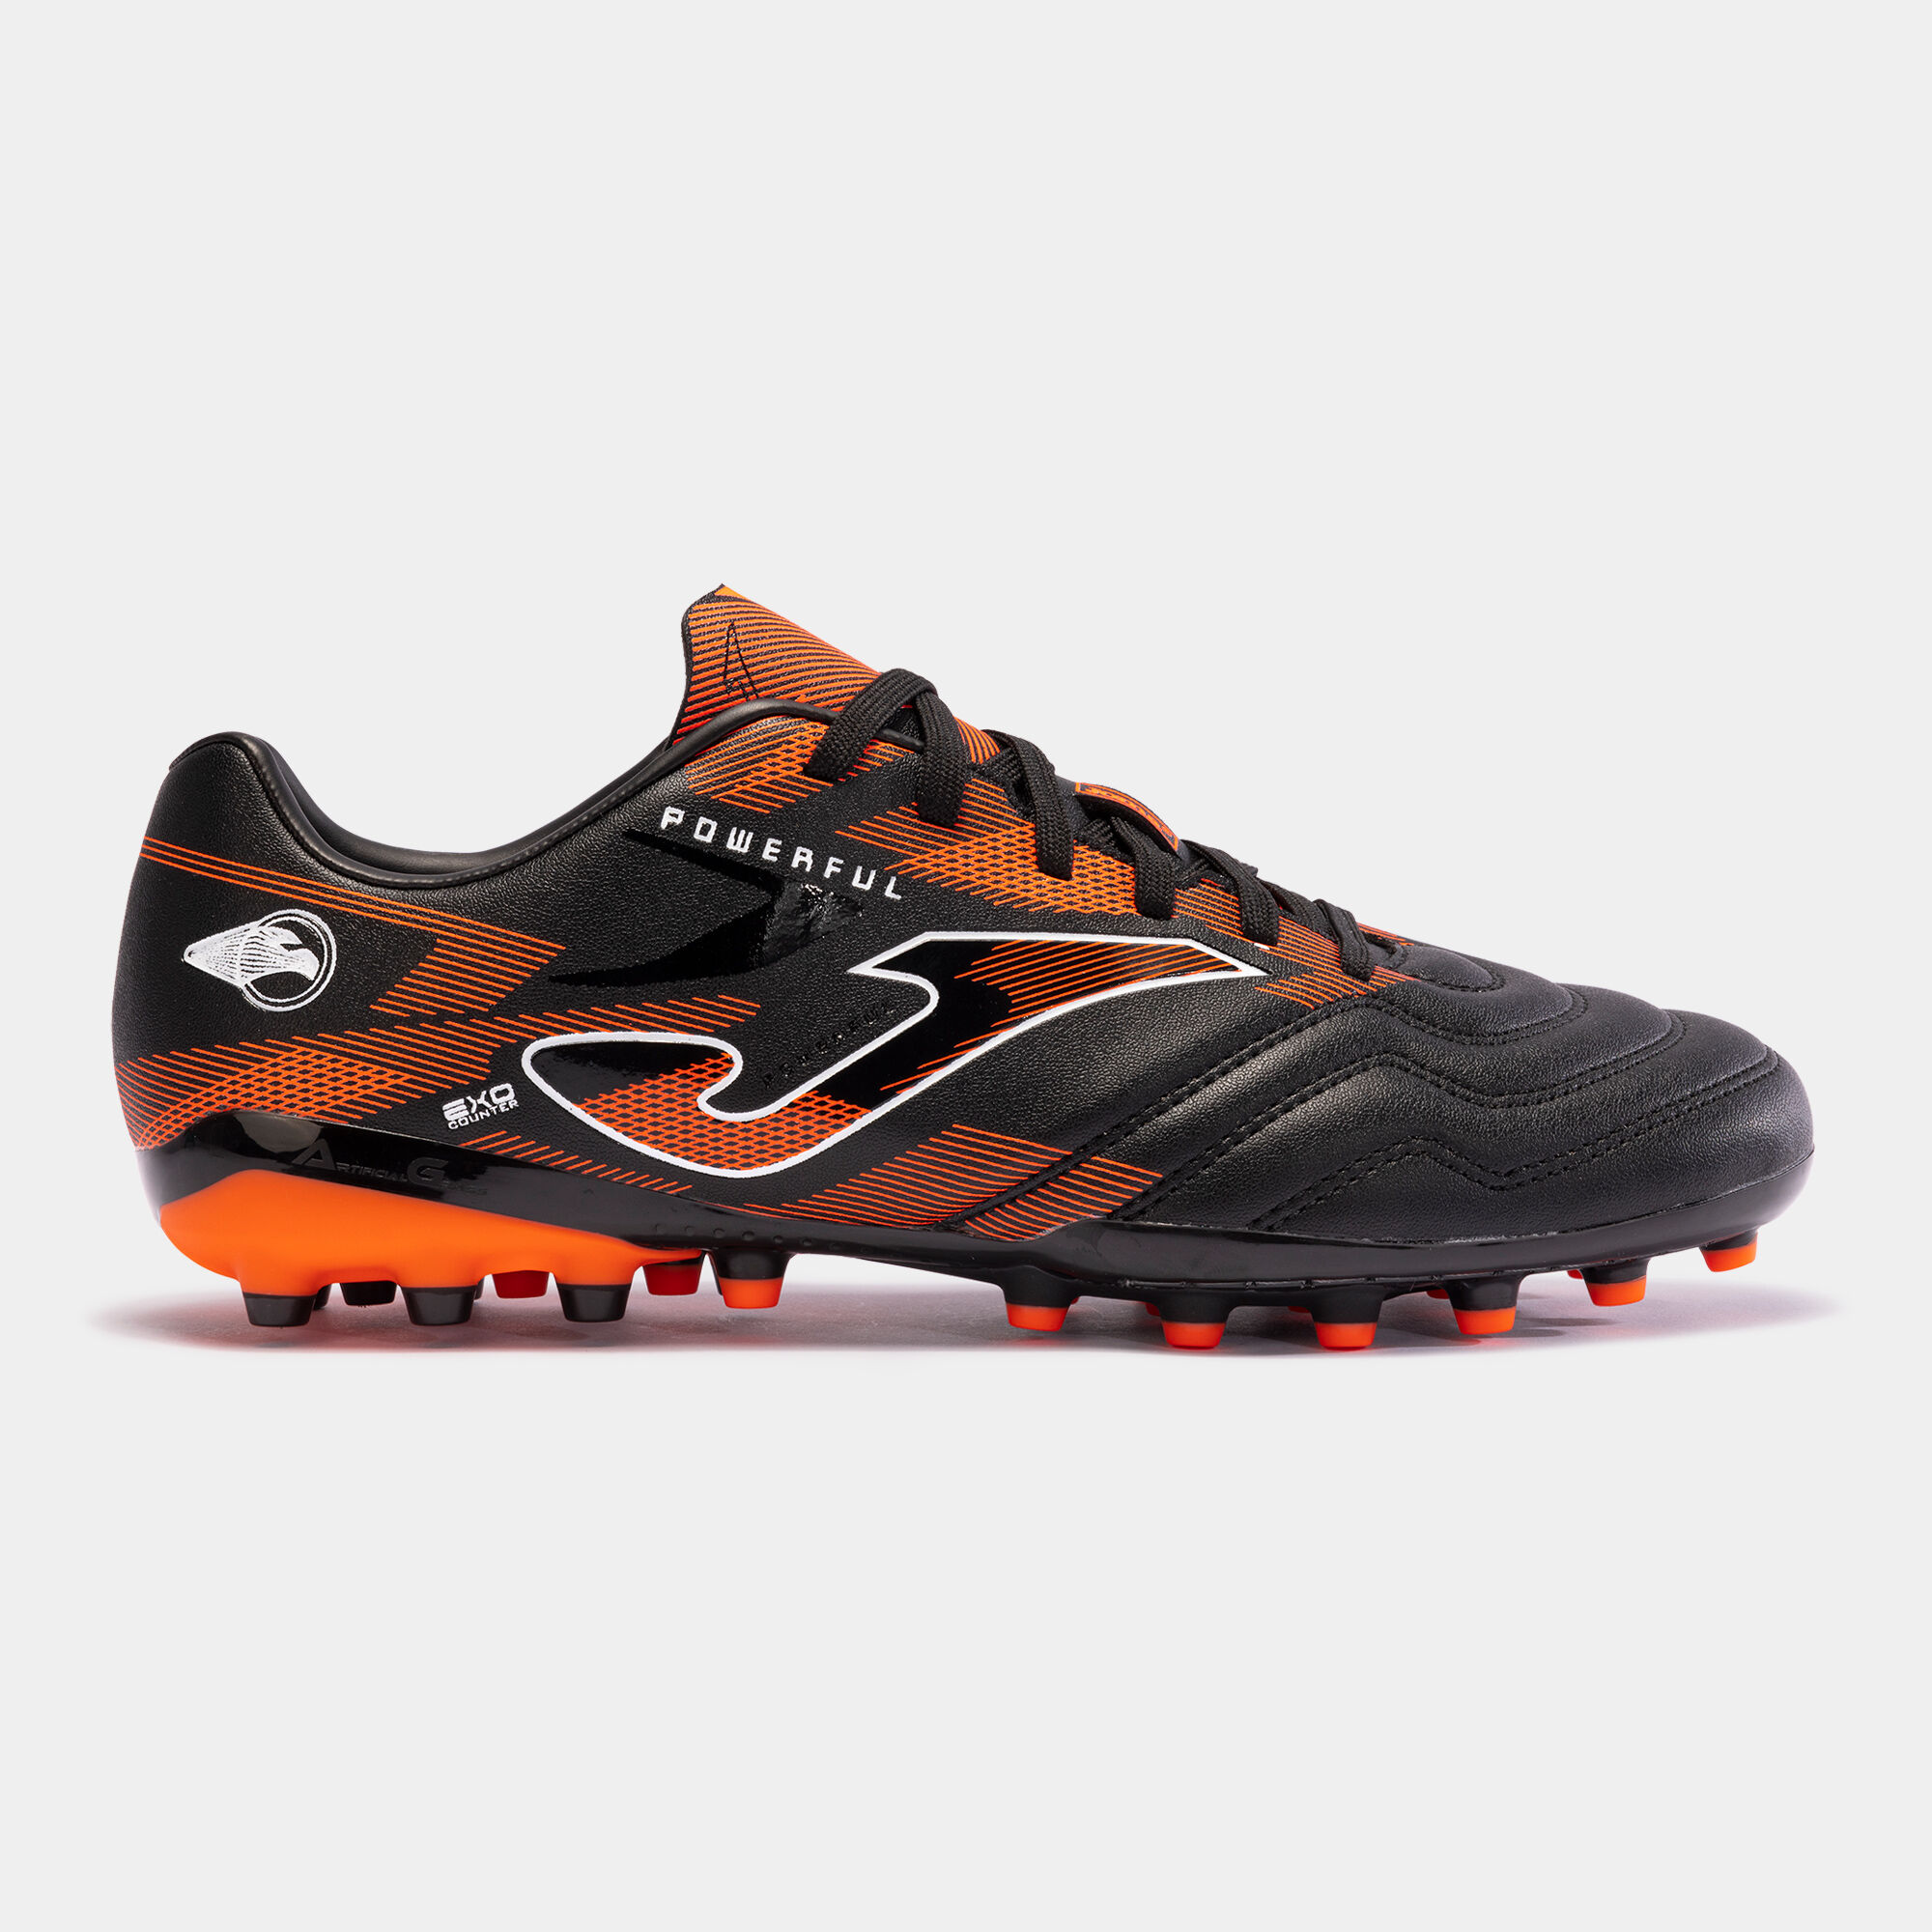 Chaussures football Powerful 24 gazon synthétique AG noir